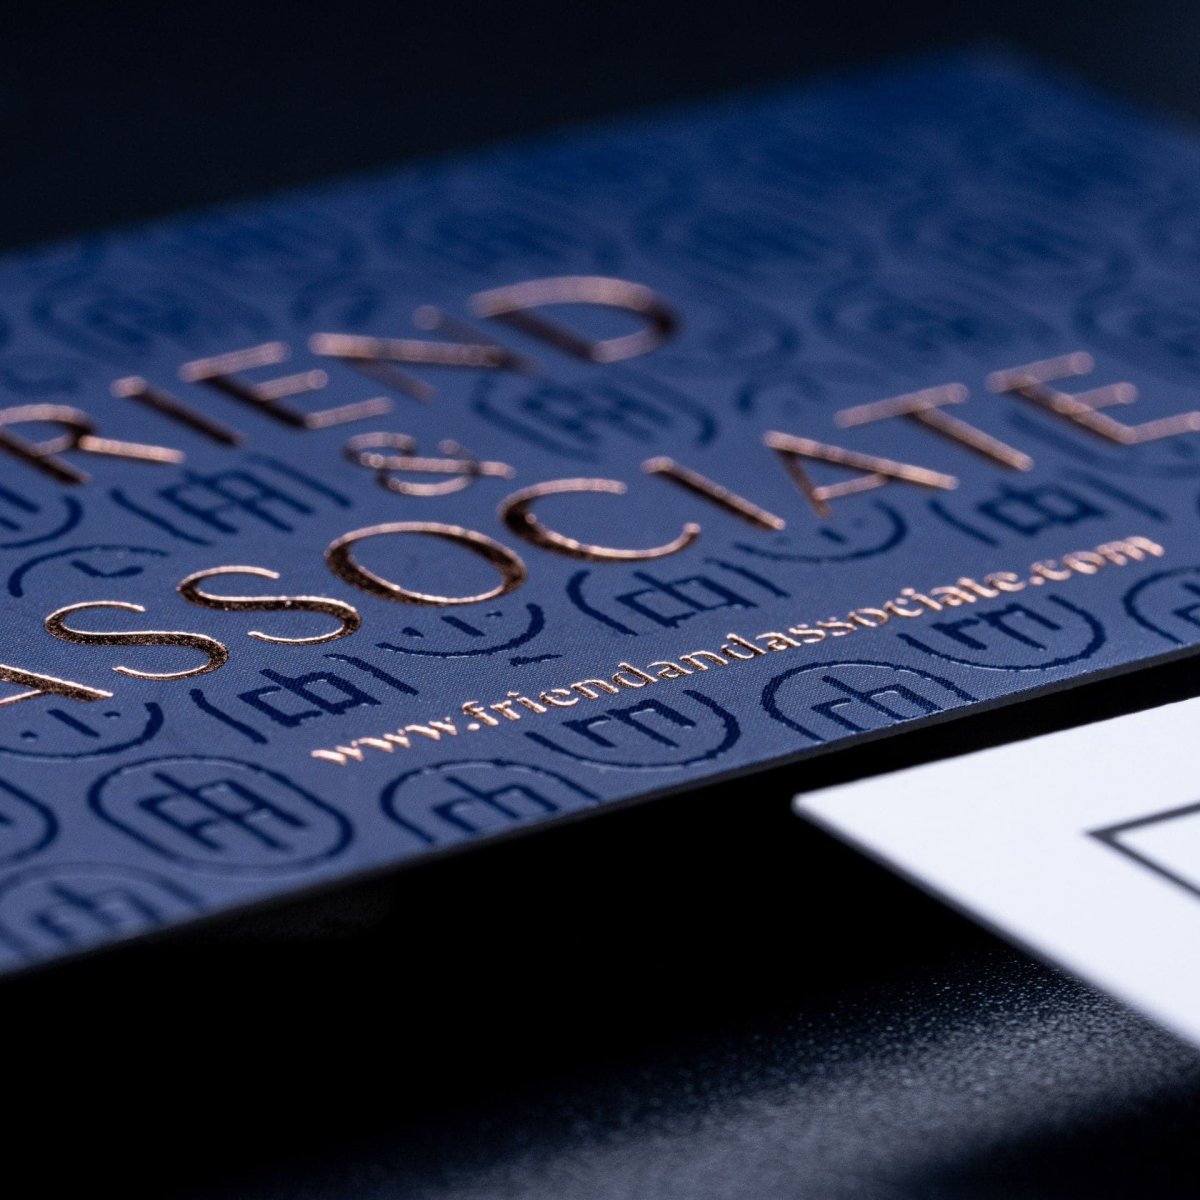 print - Business Card Design Service - Print Peppermint - custom